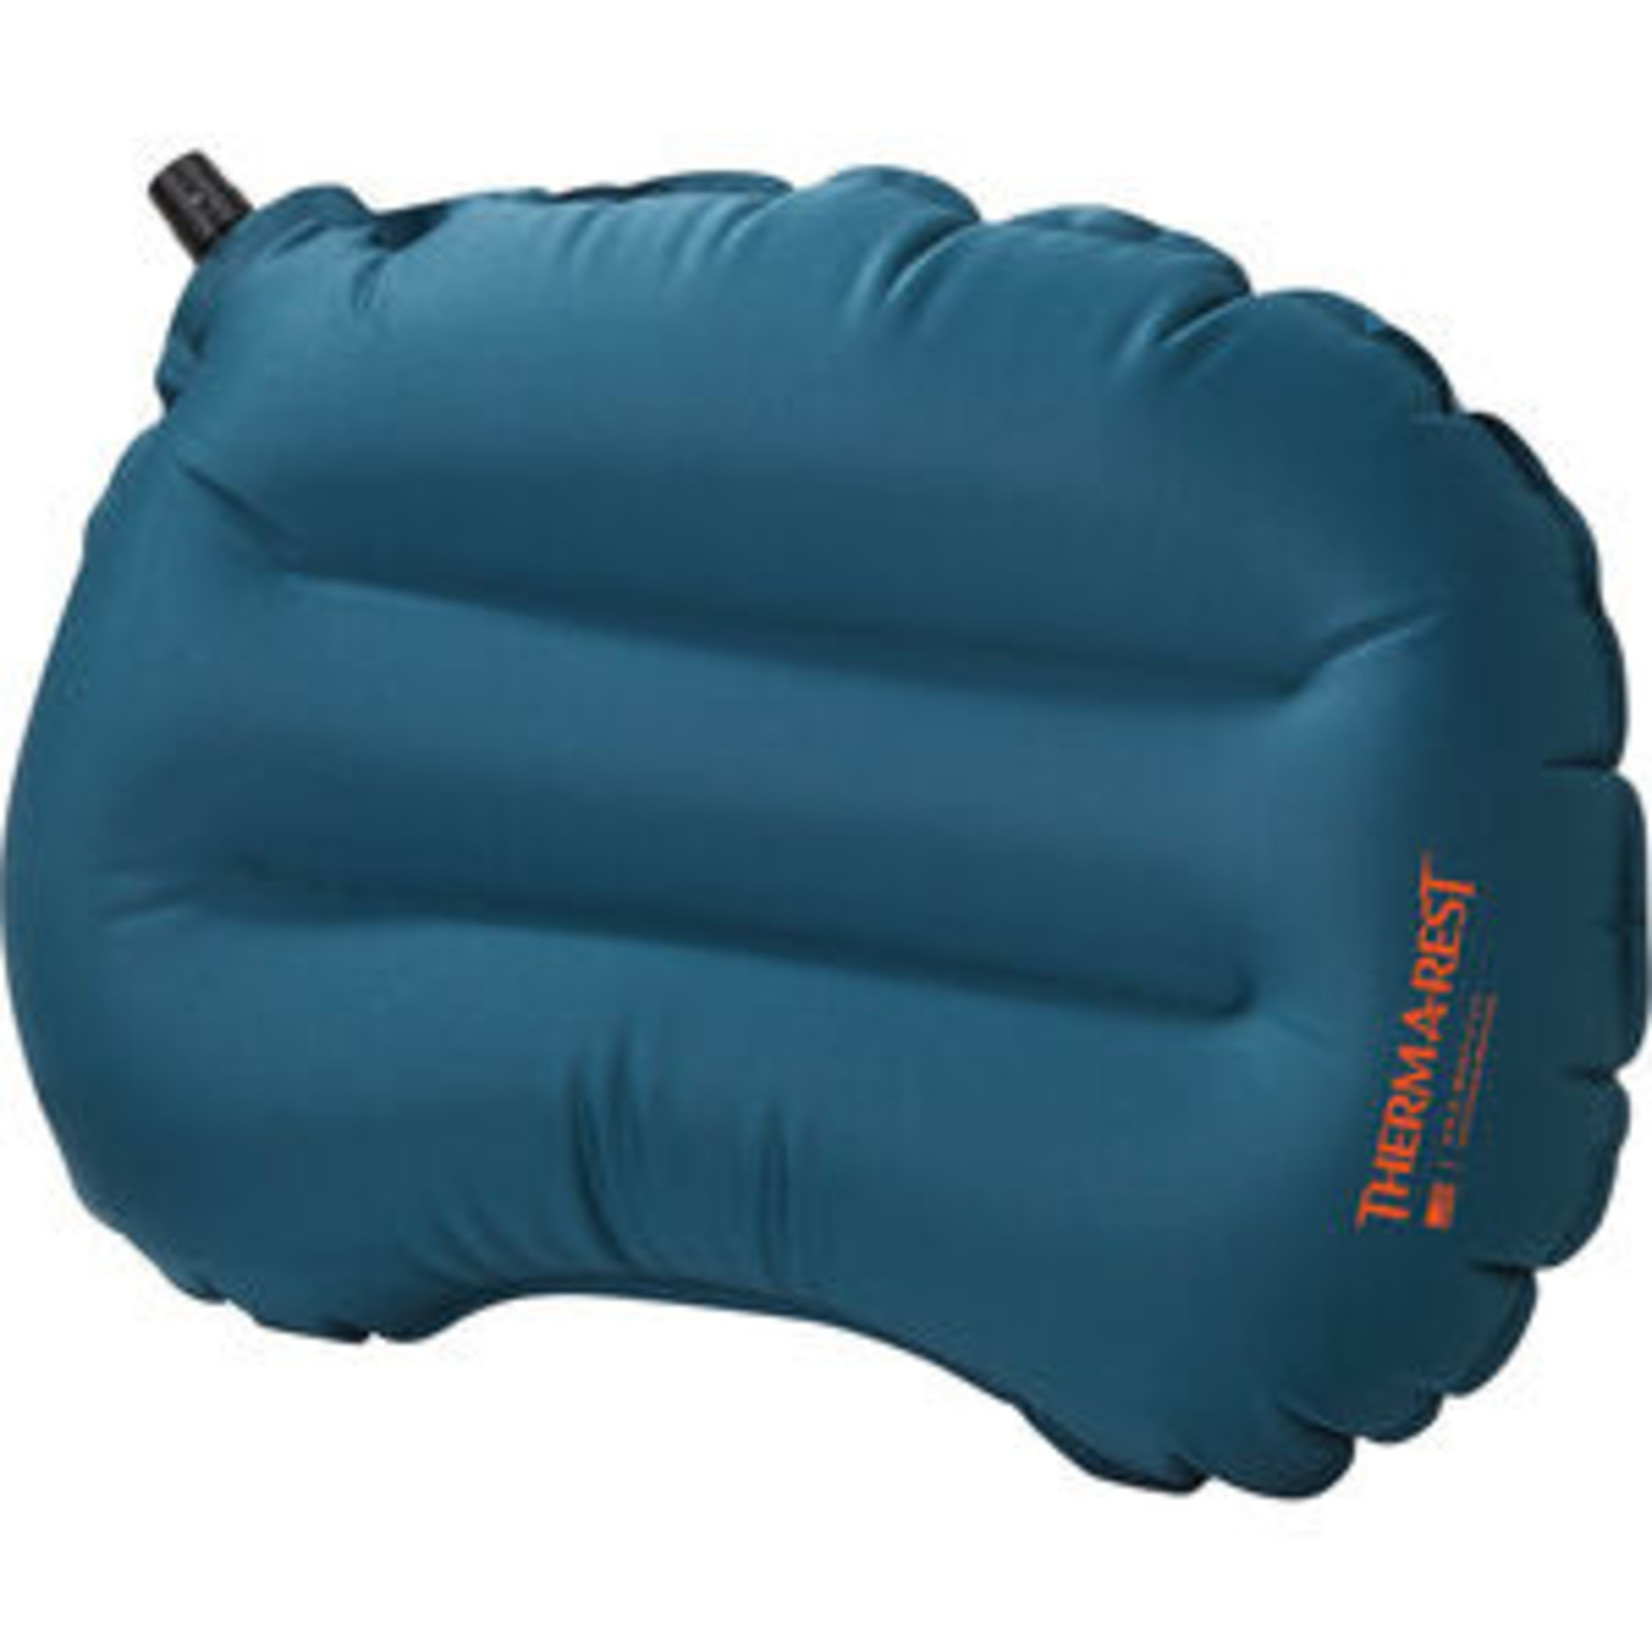 Therm-a-Rest Air Head Lite Pillow